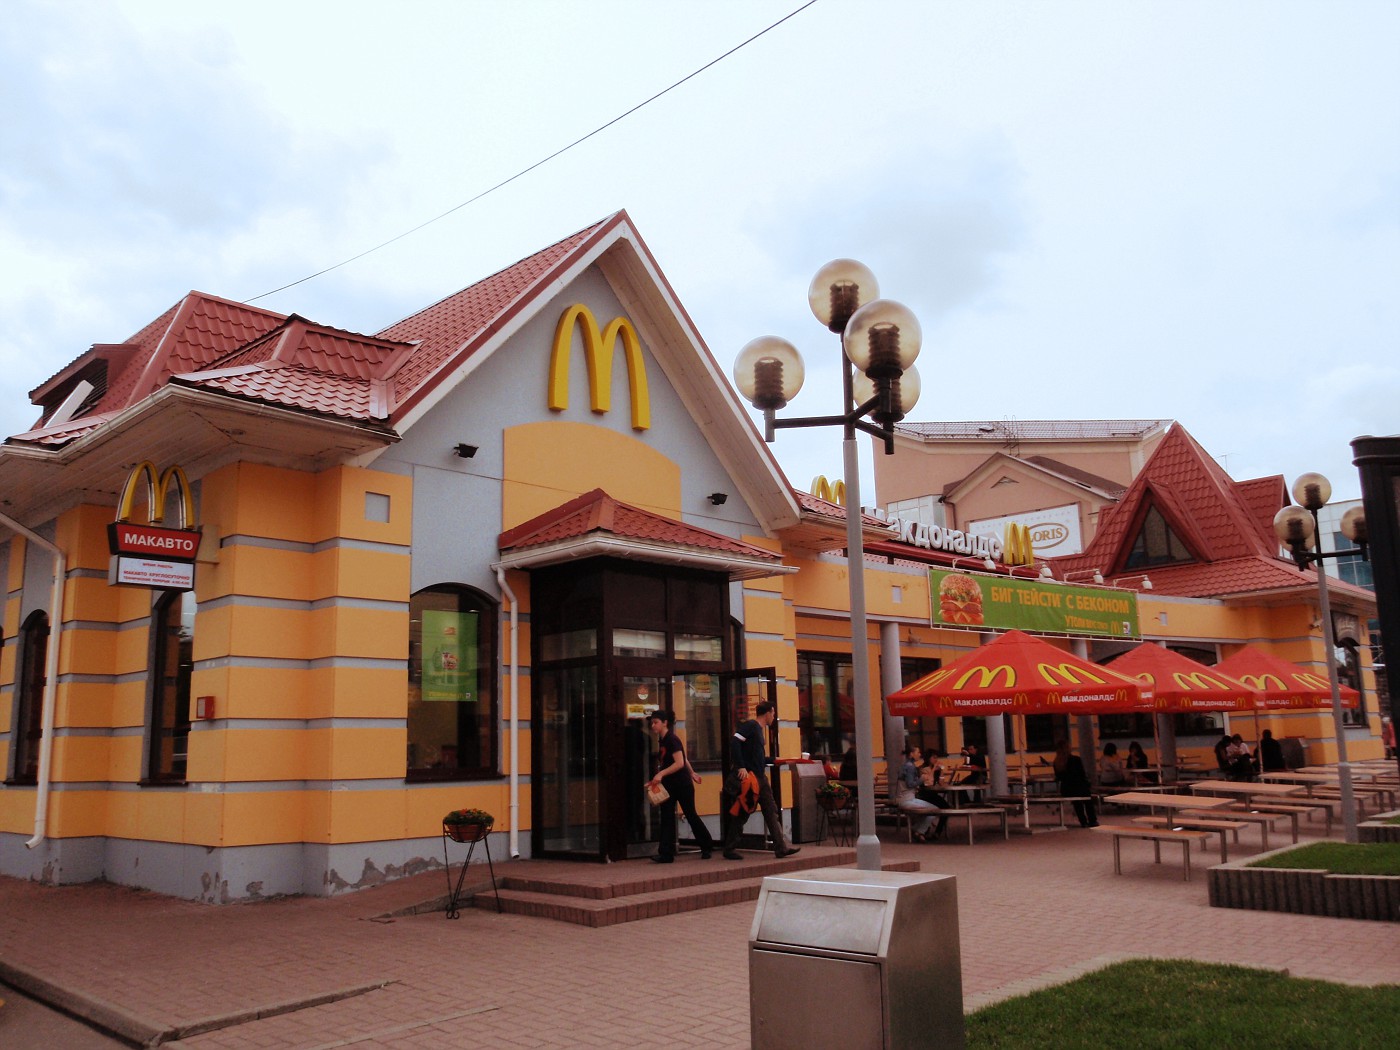 McDonalds is everywhere!